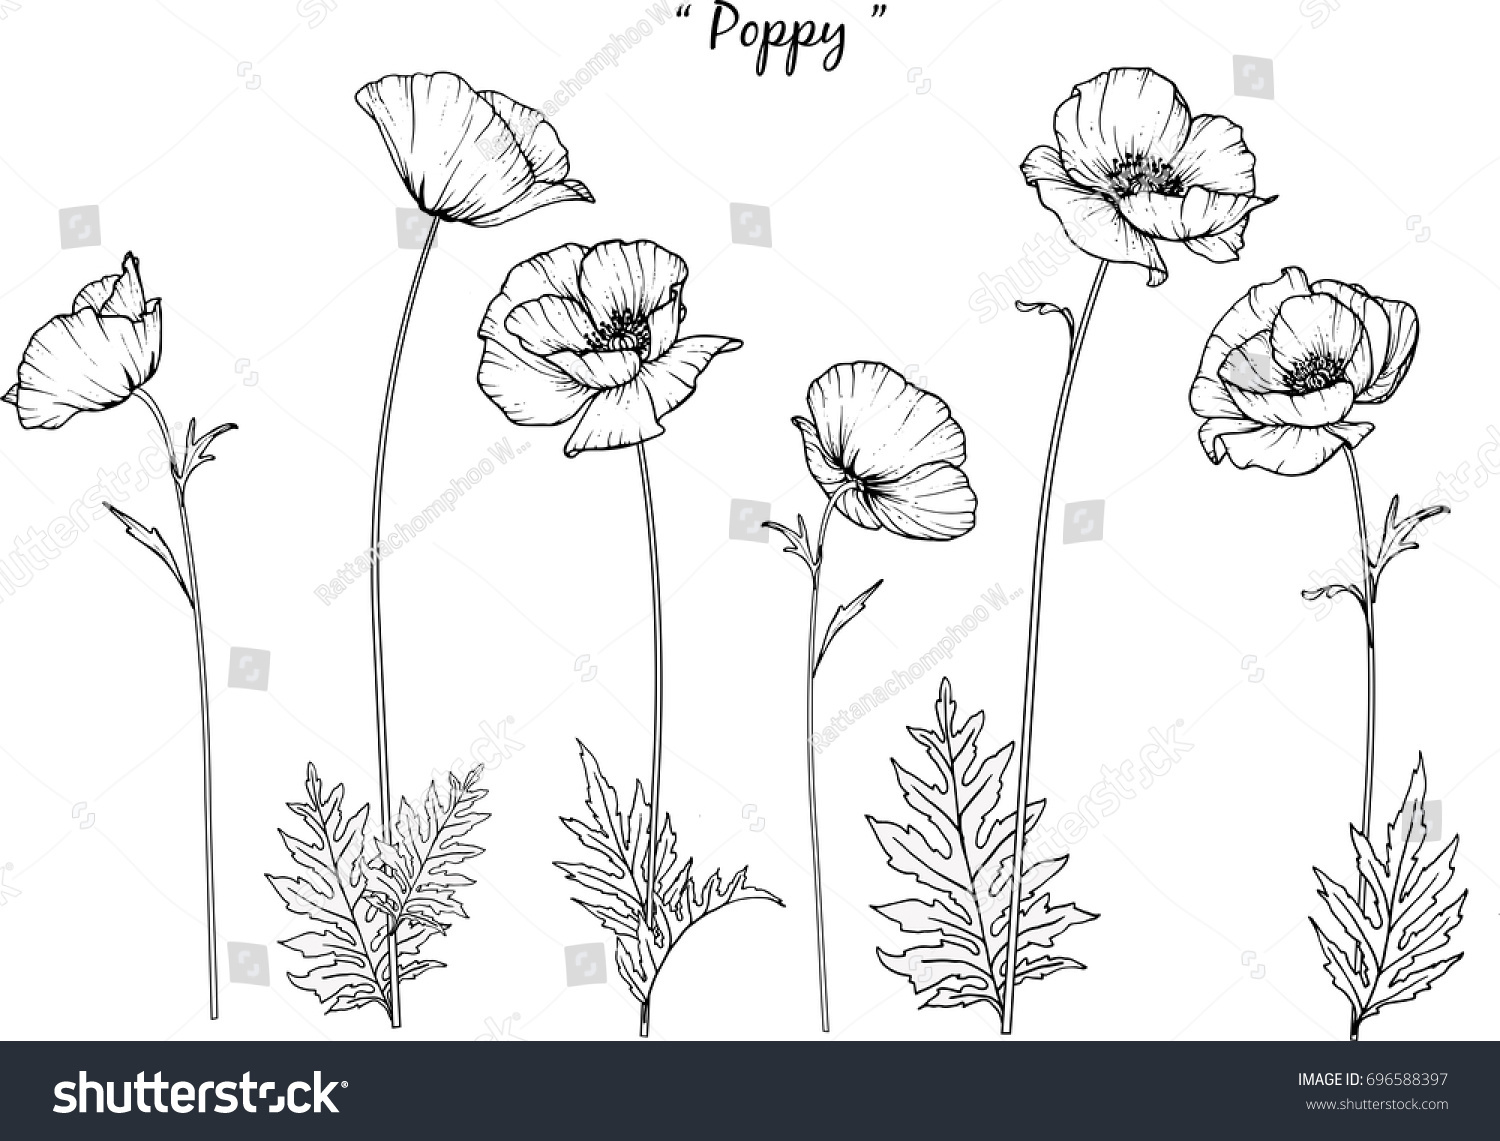 28,688 Poppy sketch Images, Stock Photos & Vectors | Shutterstock